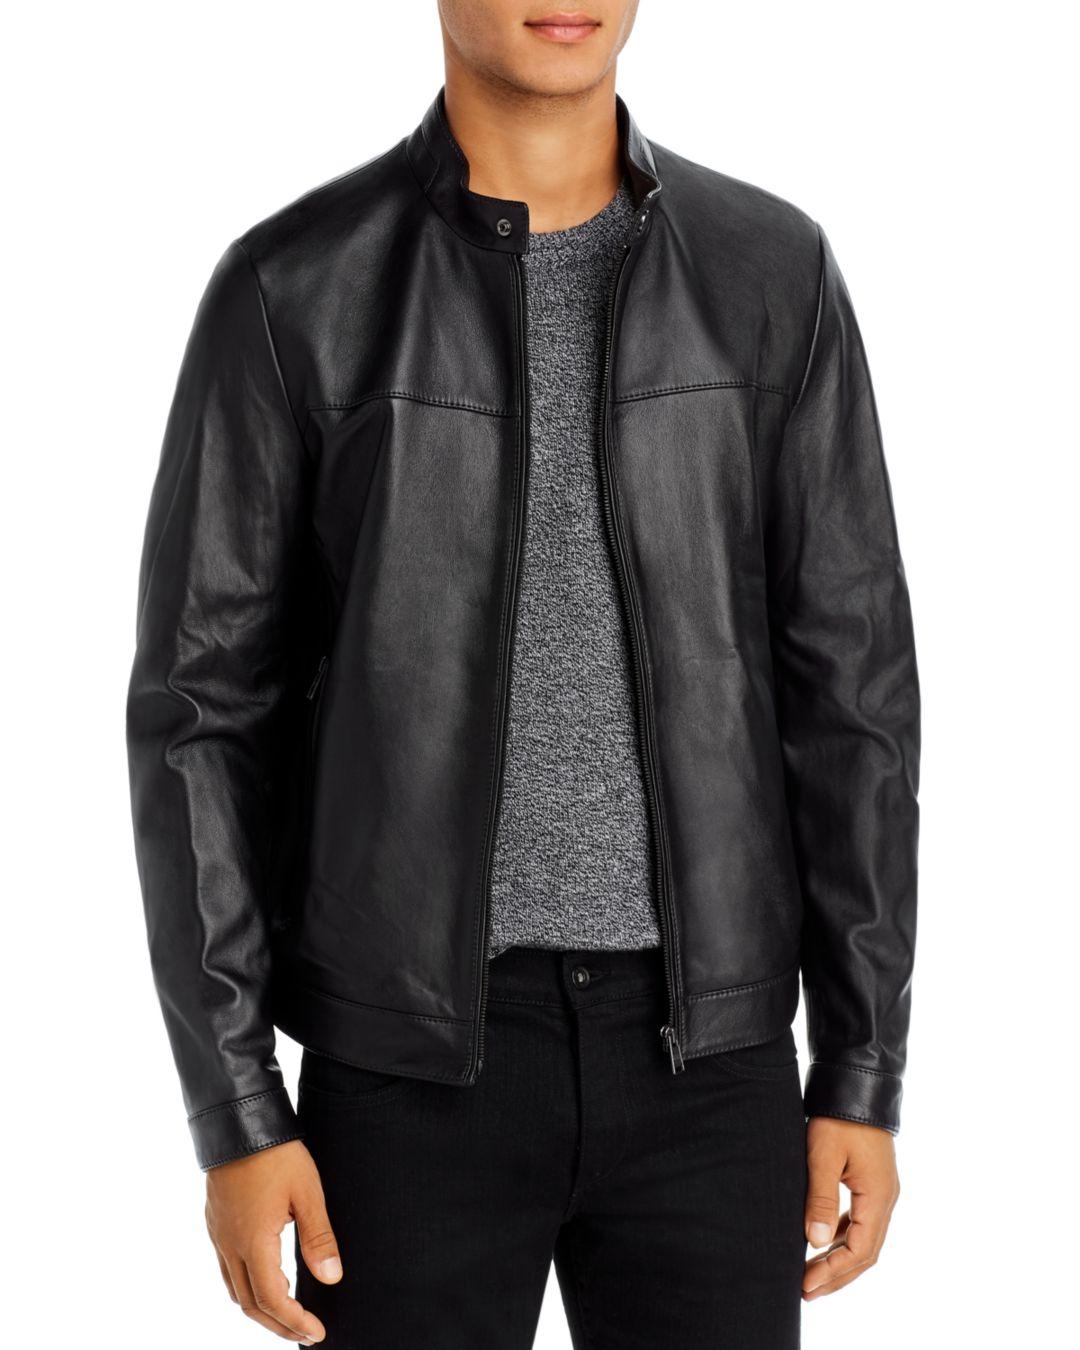 BOSS by HUGO BOSS Nardi Leather Jacket in Black for Men - Lyst